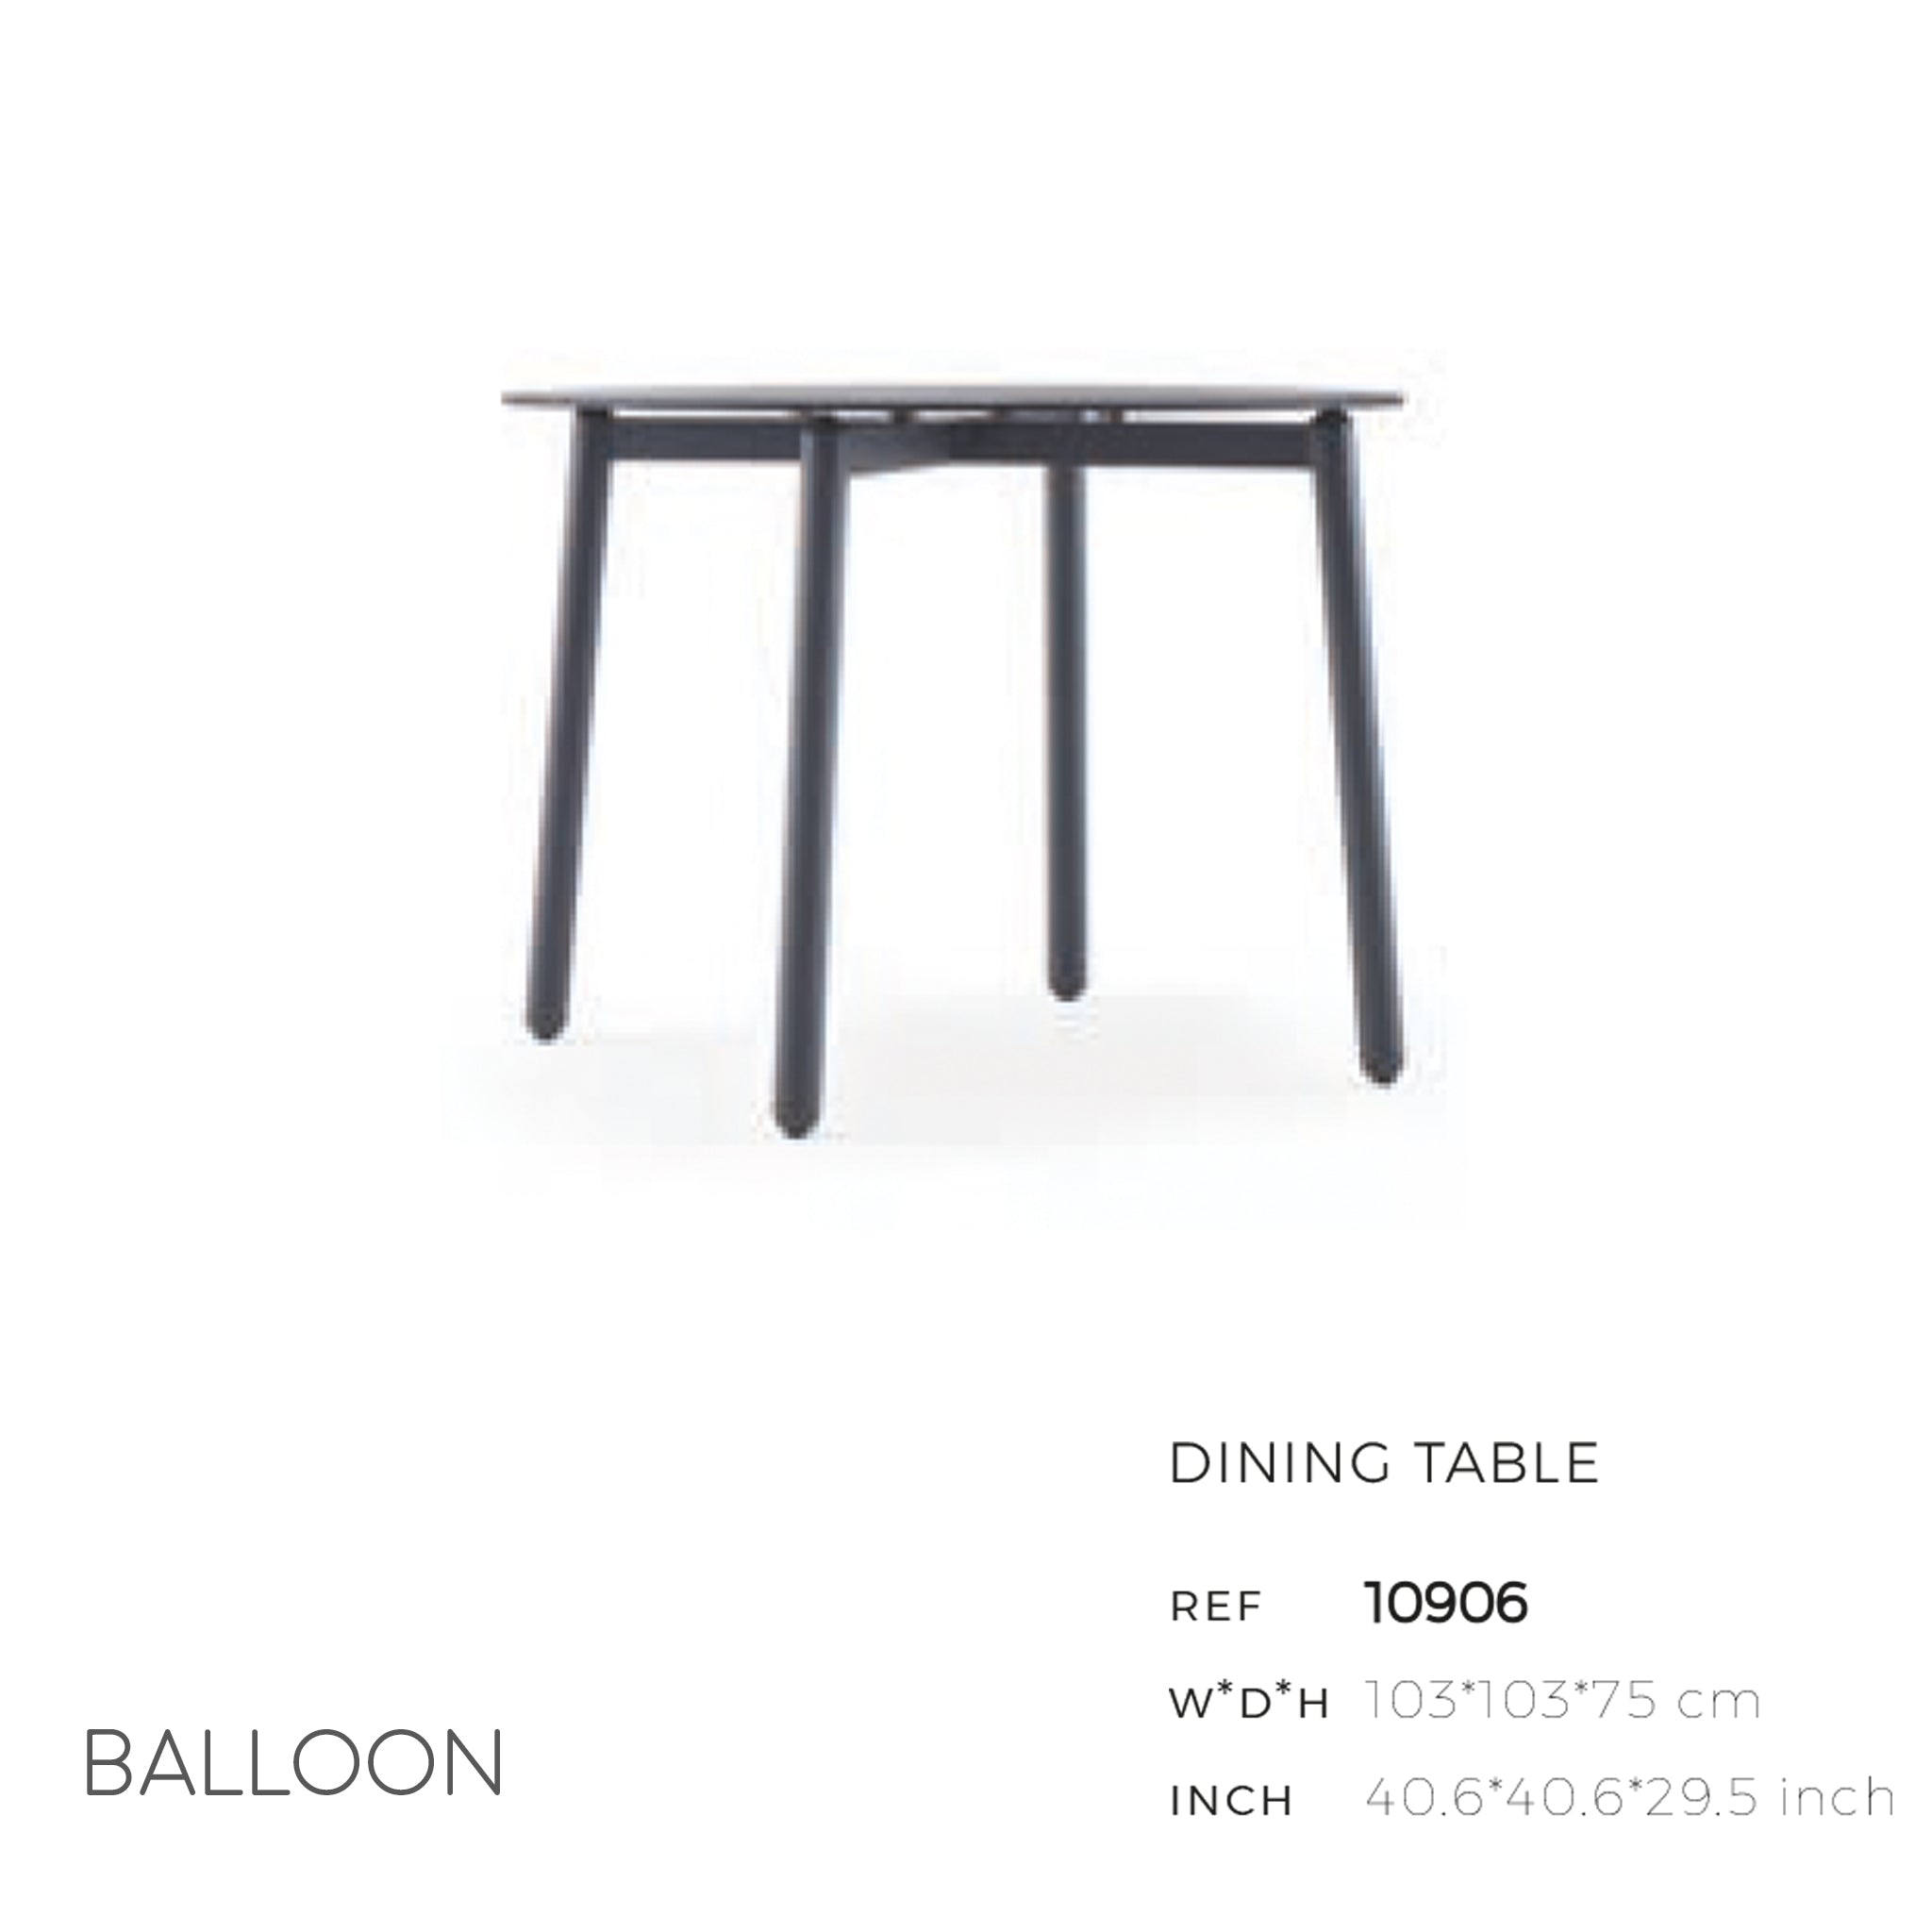 Balloon Dining Table